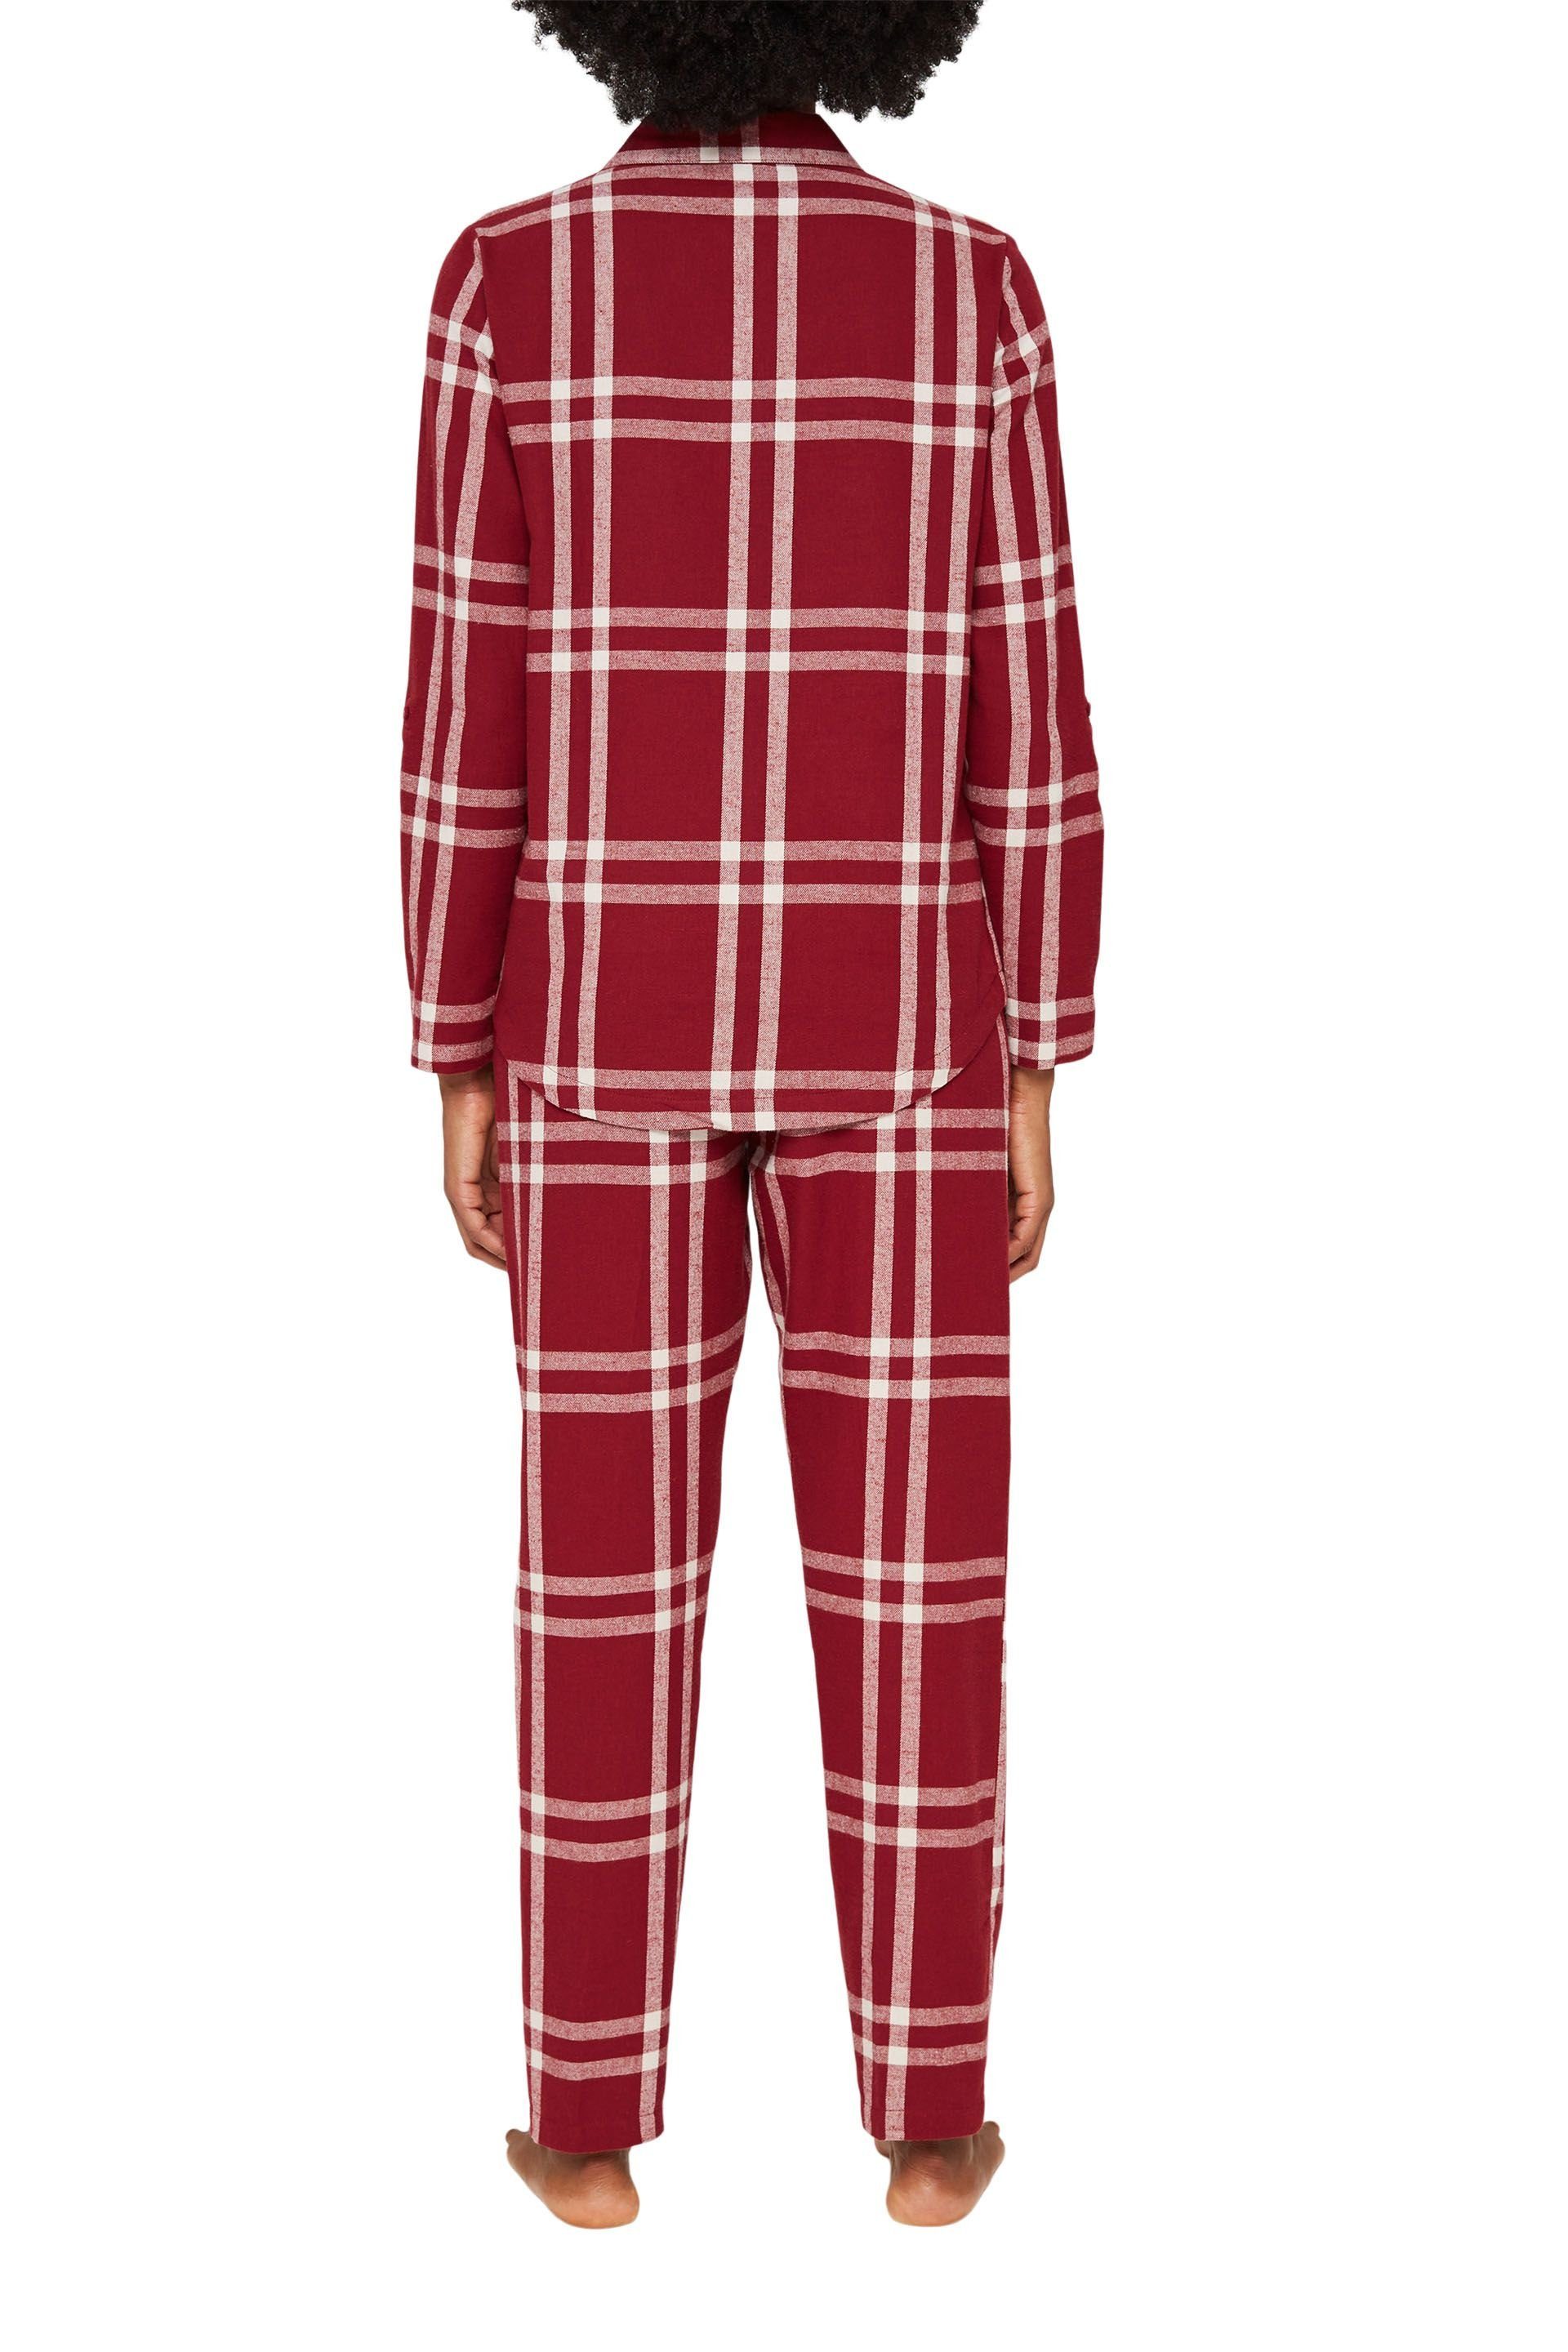 red Karierter Esprit Pyjama Flanell-Pyjama cherry